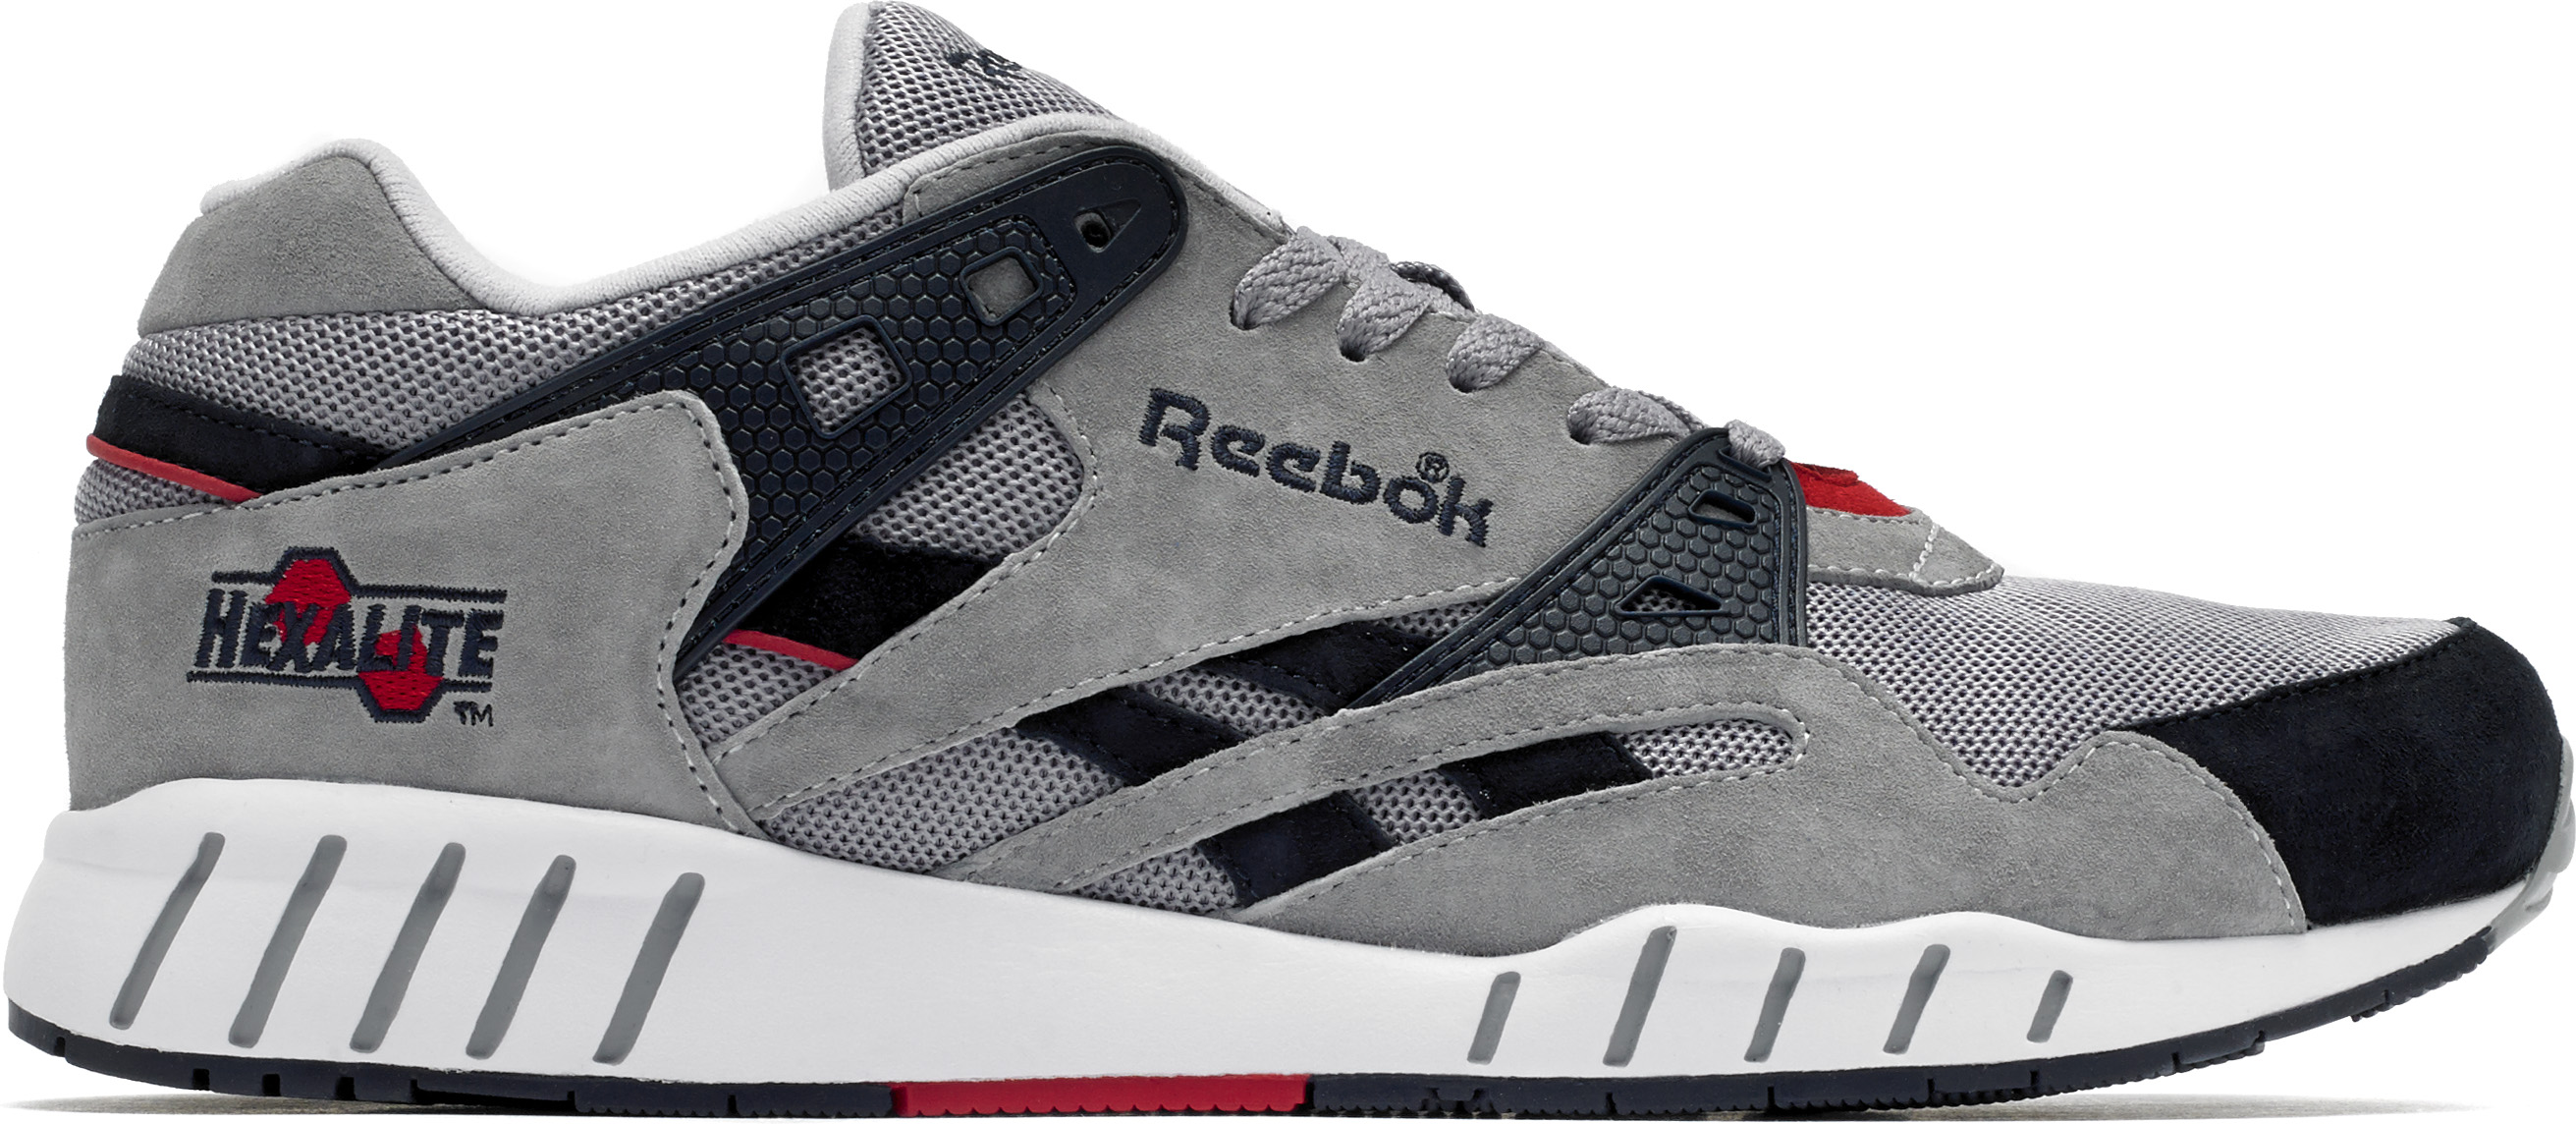 reebok latest running shoes 2014